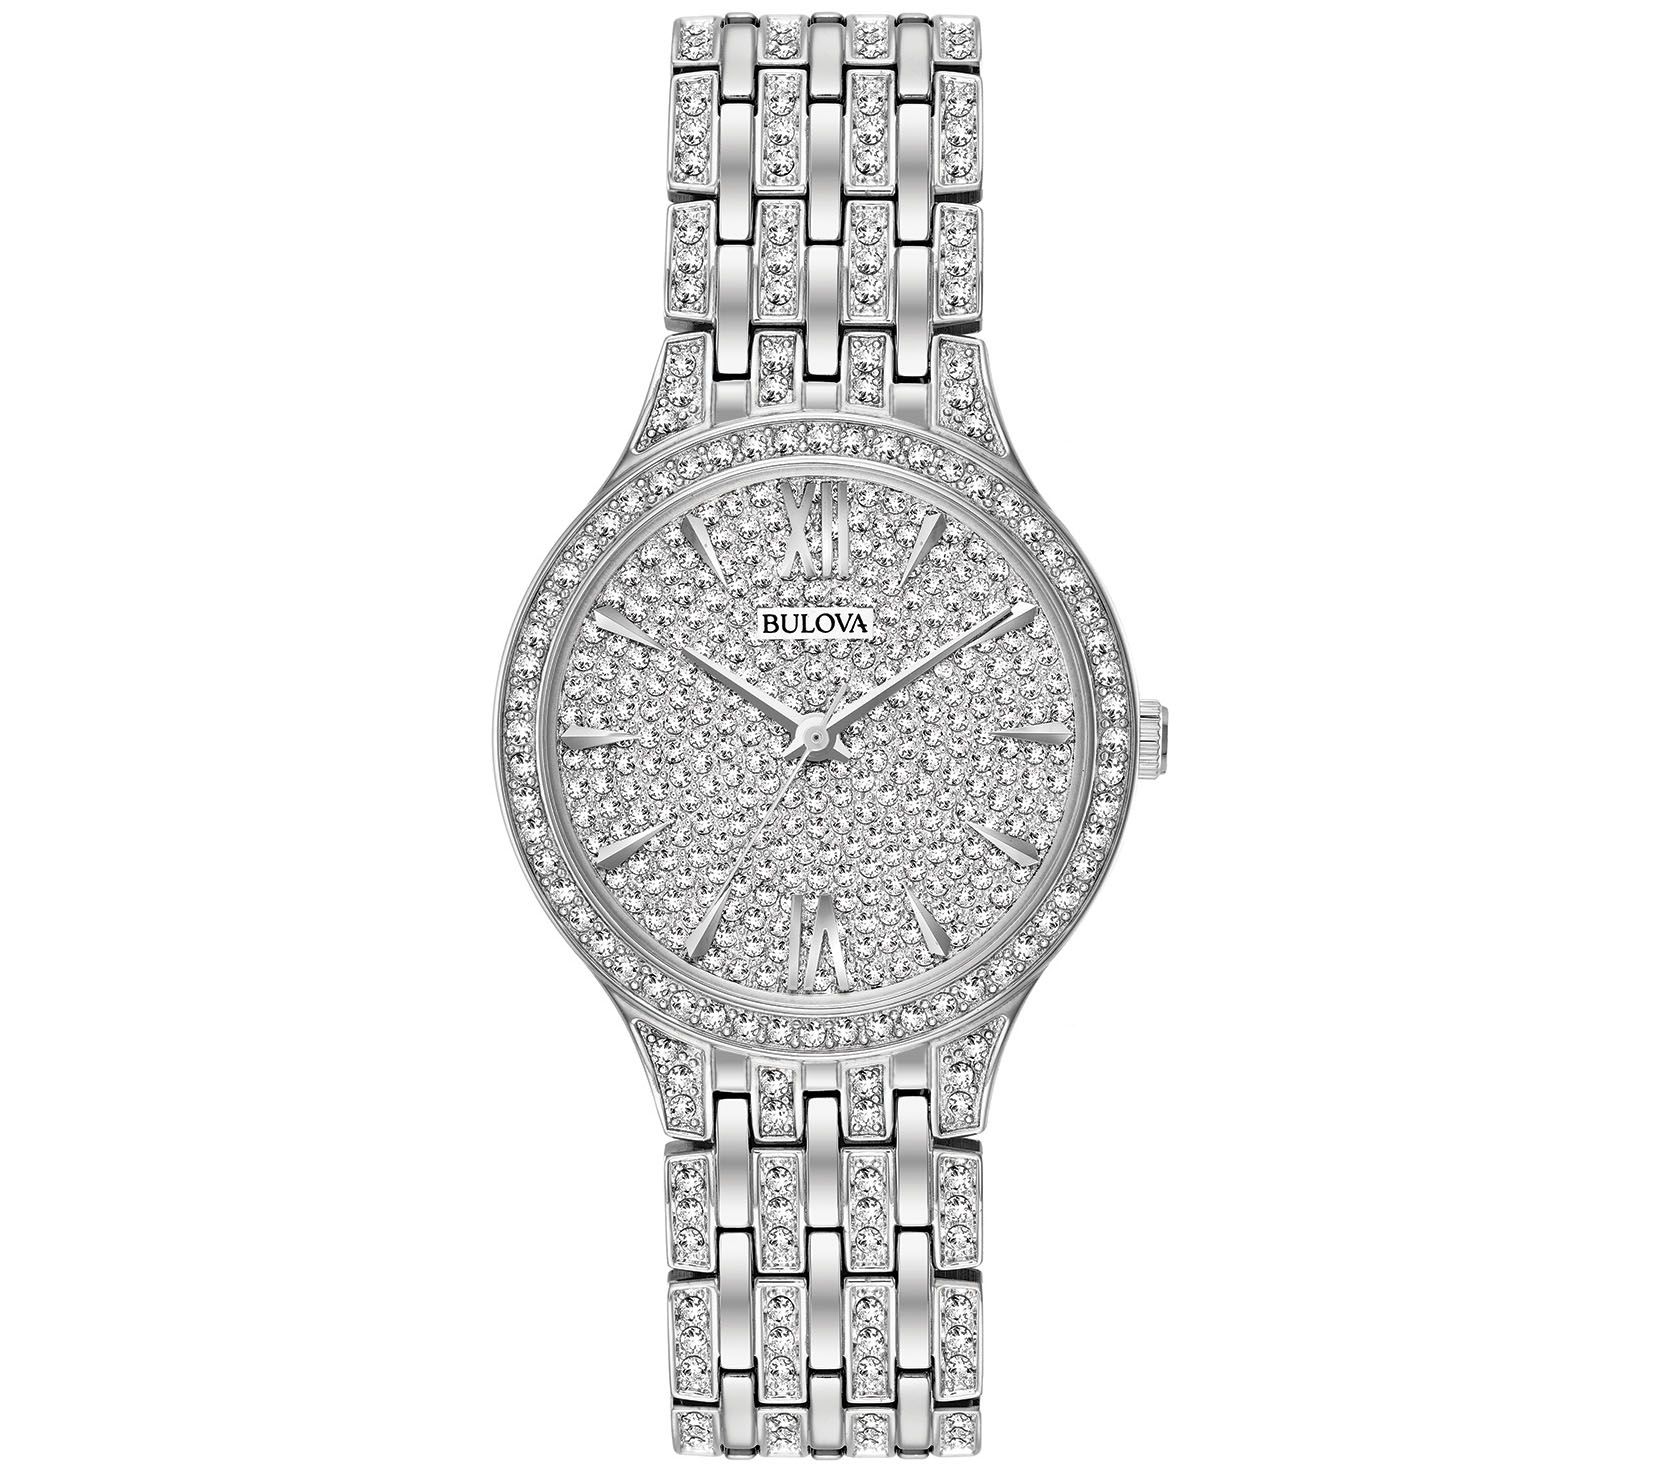 Bulova Crystal Watch on Sale, 51% OFF | www.ingeniovirtual.com